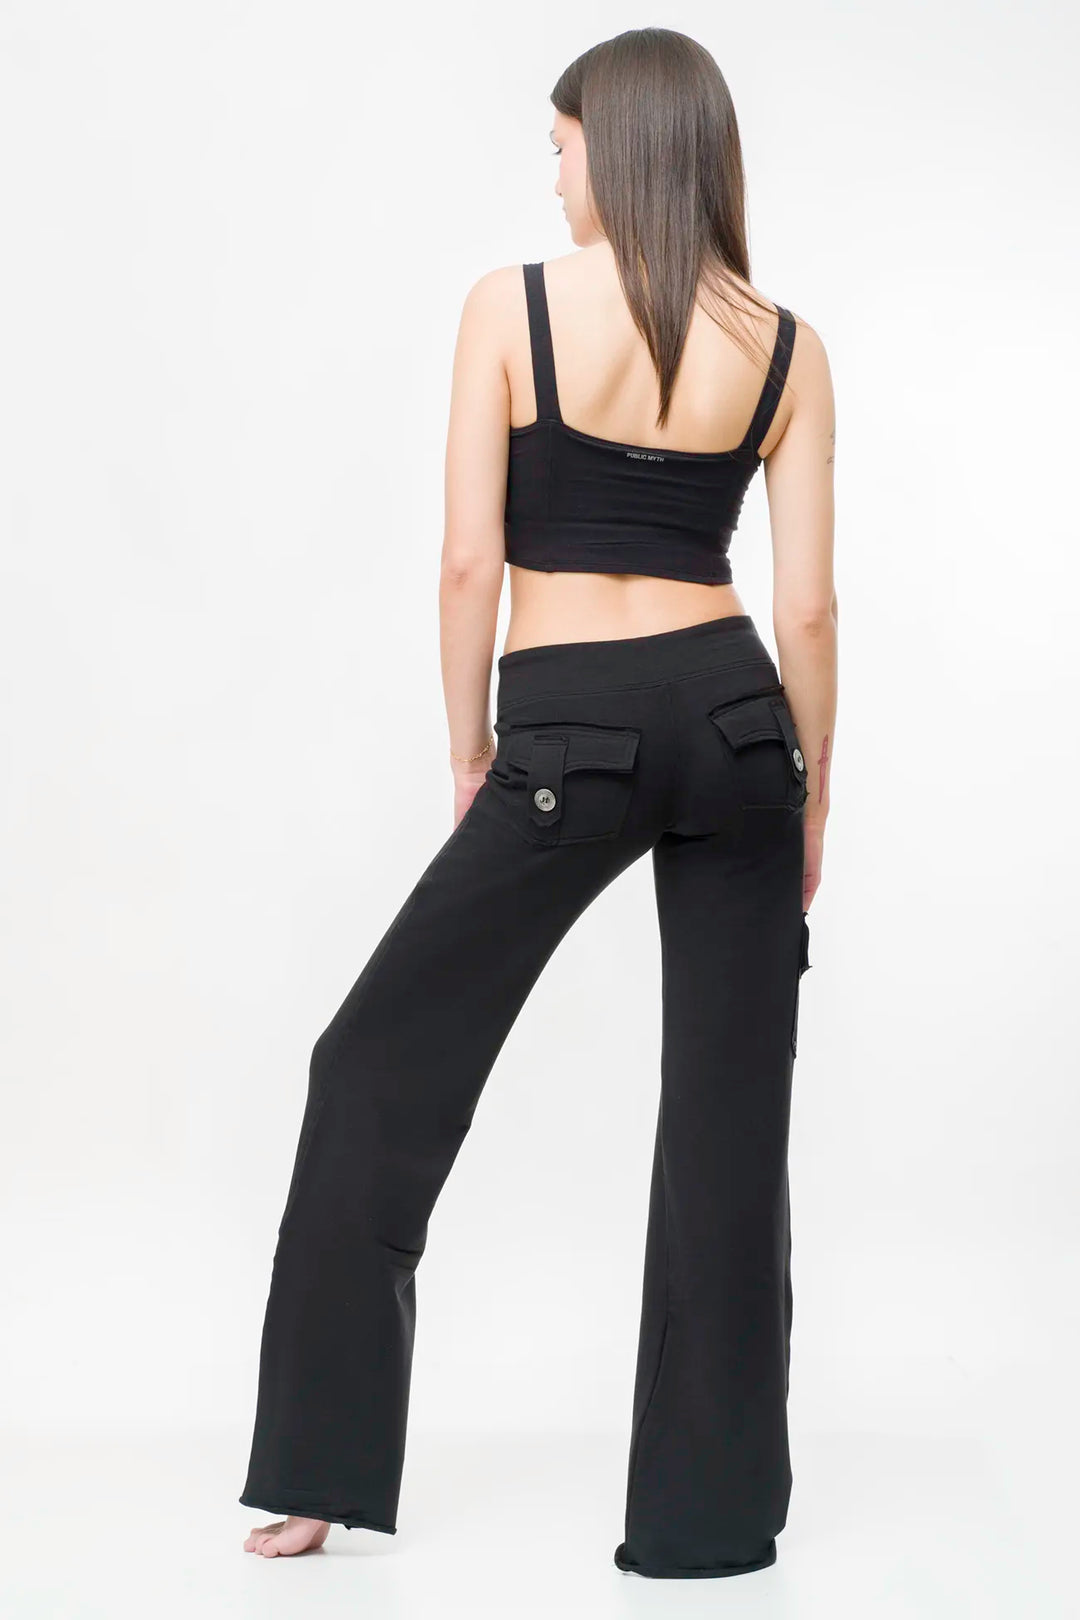 Black yoga pants with back pockets